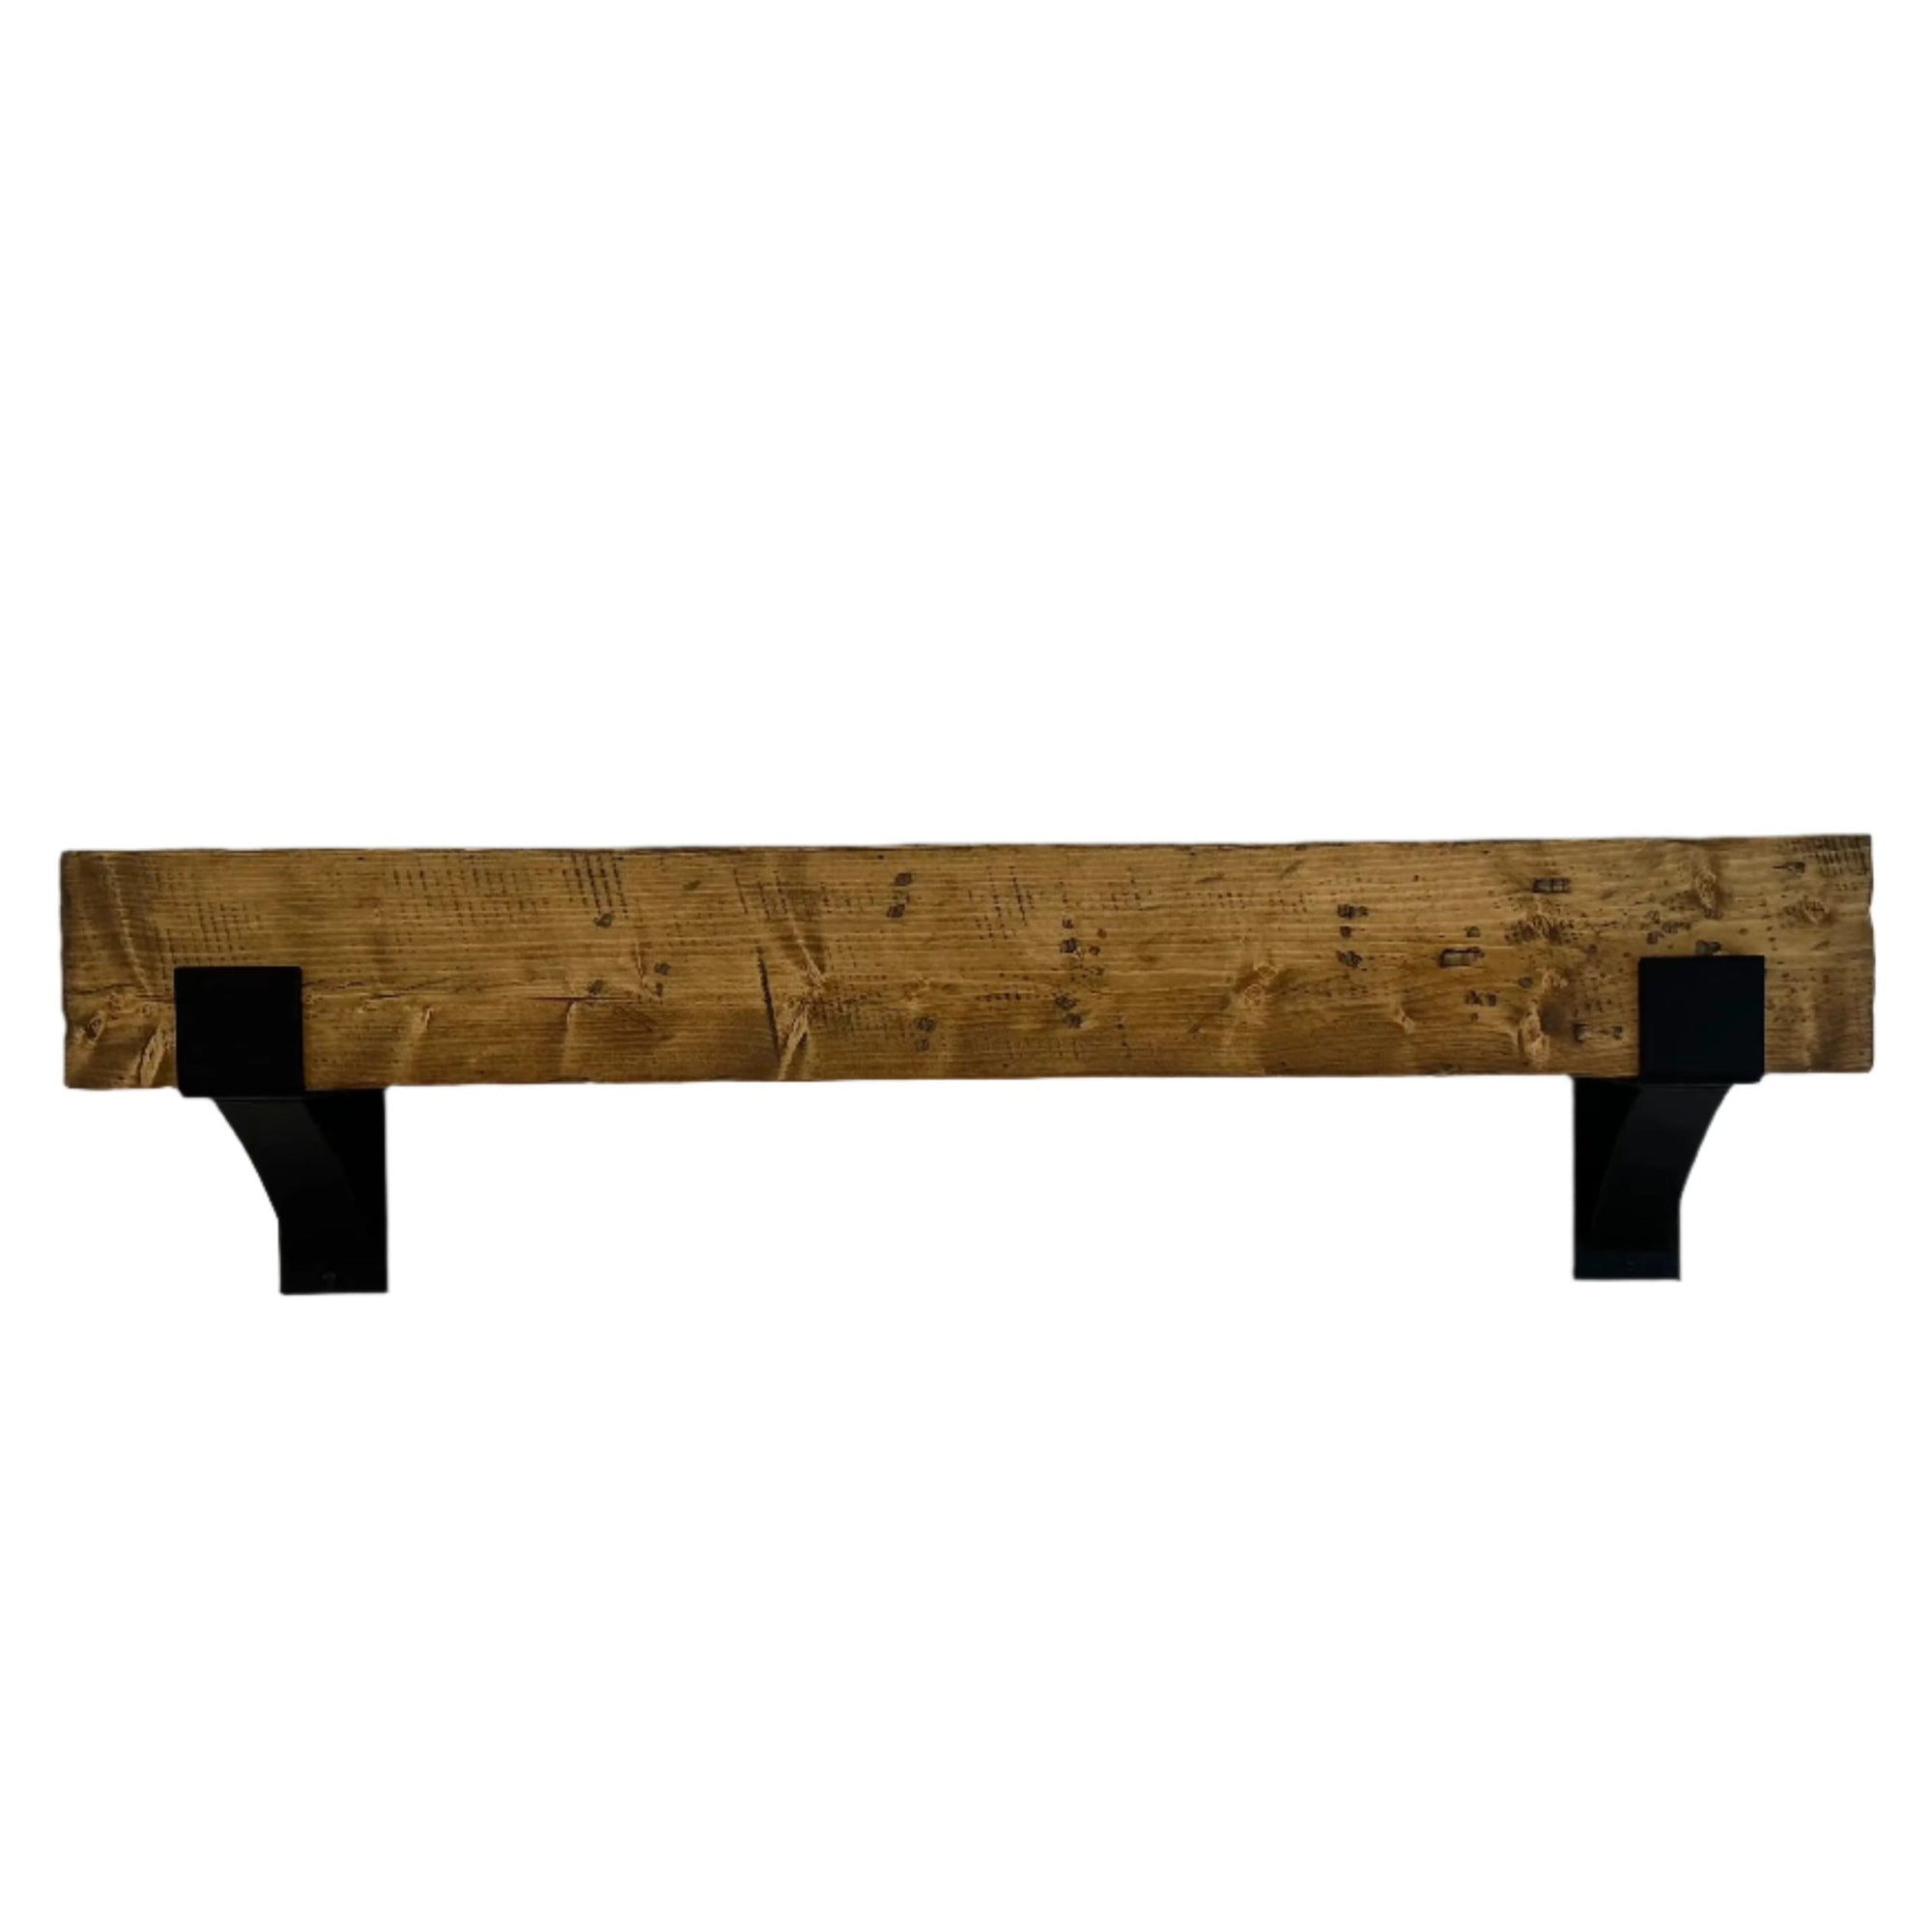 Wooden Mantel and Steel Bracket Kit  8" Depth x 8" Wall Mount Length   | Industrial Farm Co